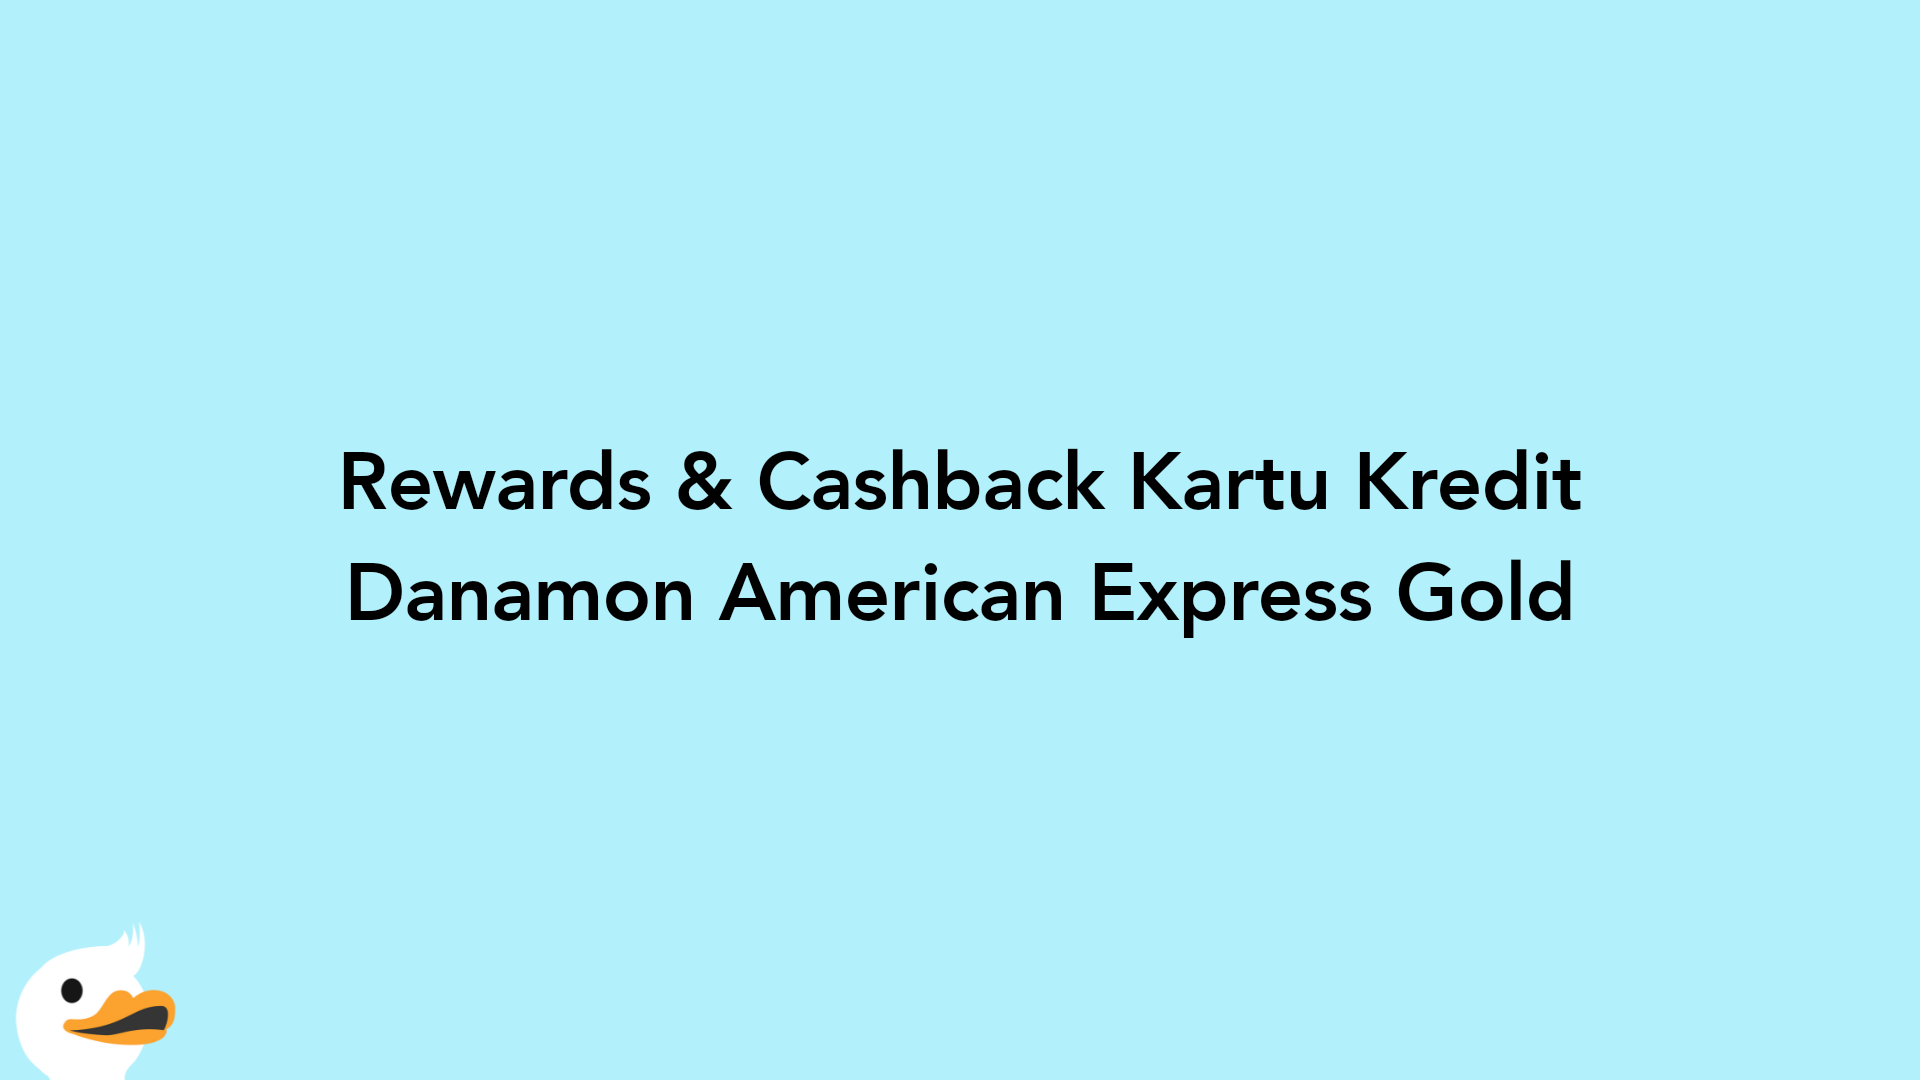 Rewards & Cashback Kartu Kredit Danamon American Express Gold